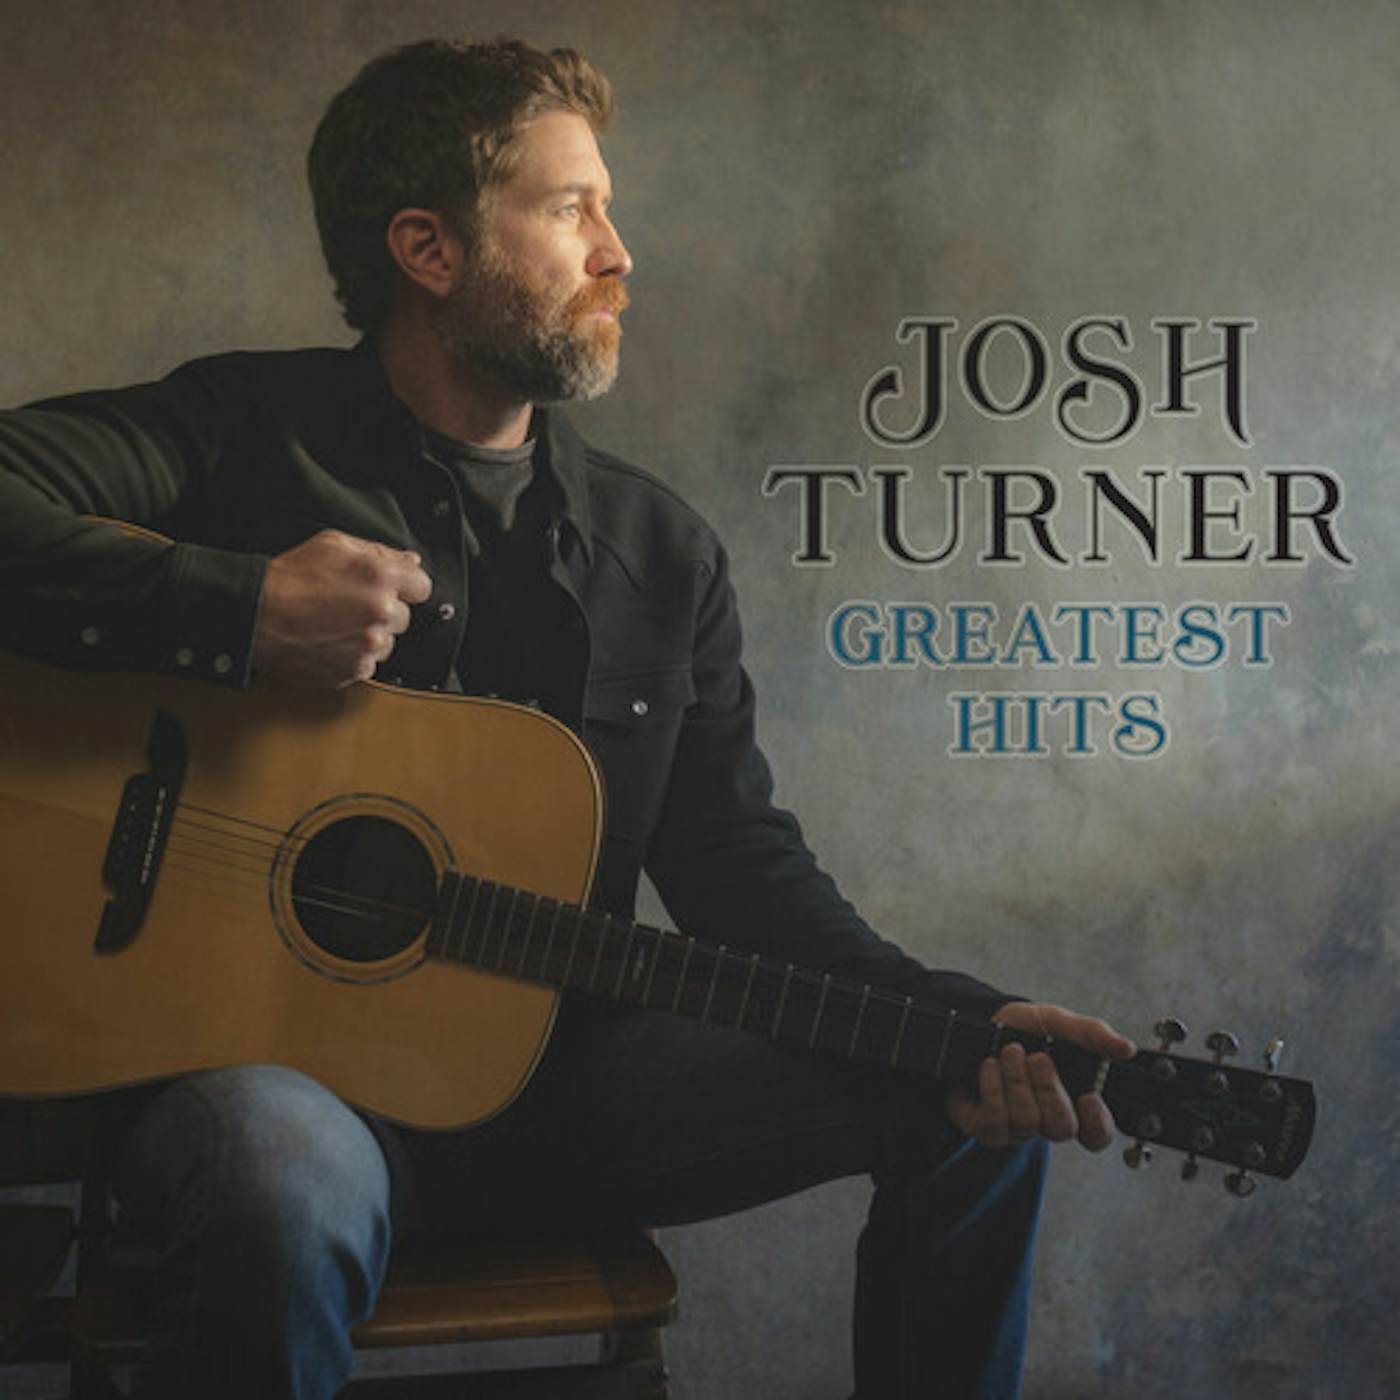 Josh Turner Greatest Hits (Ivory) Vinyl Record